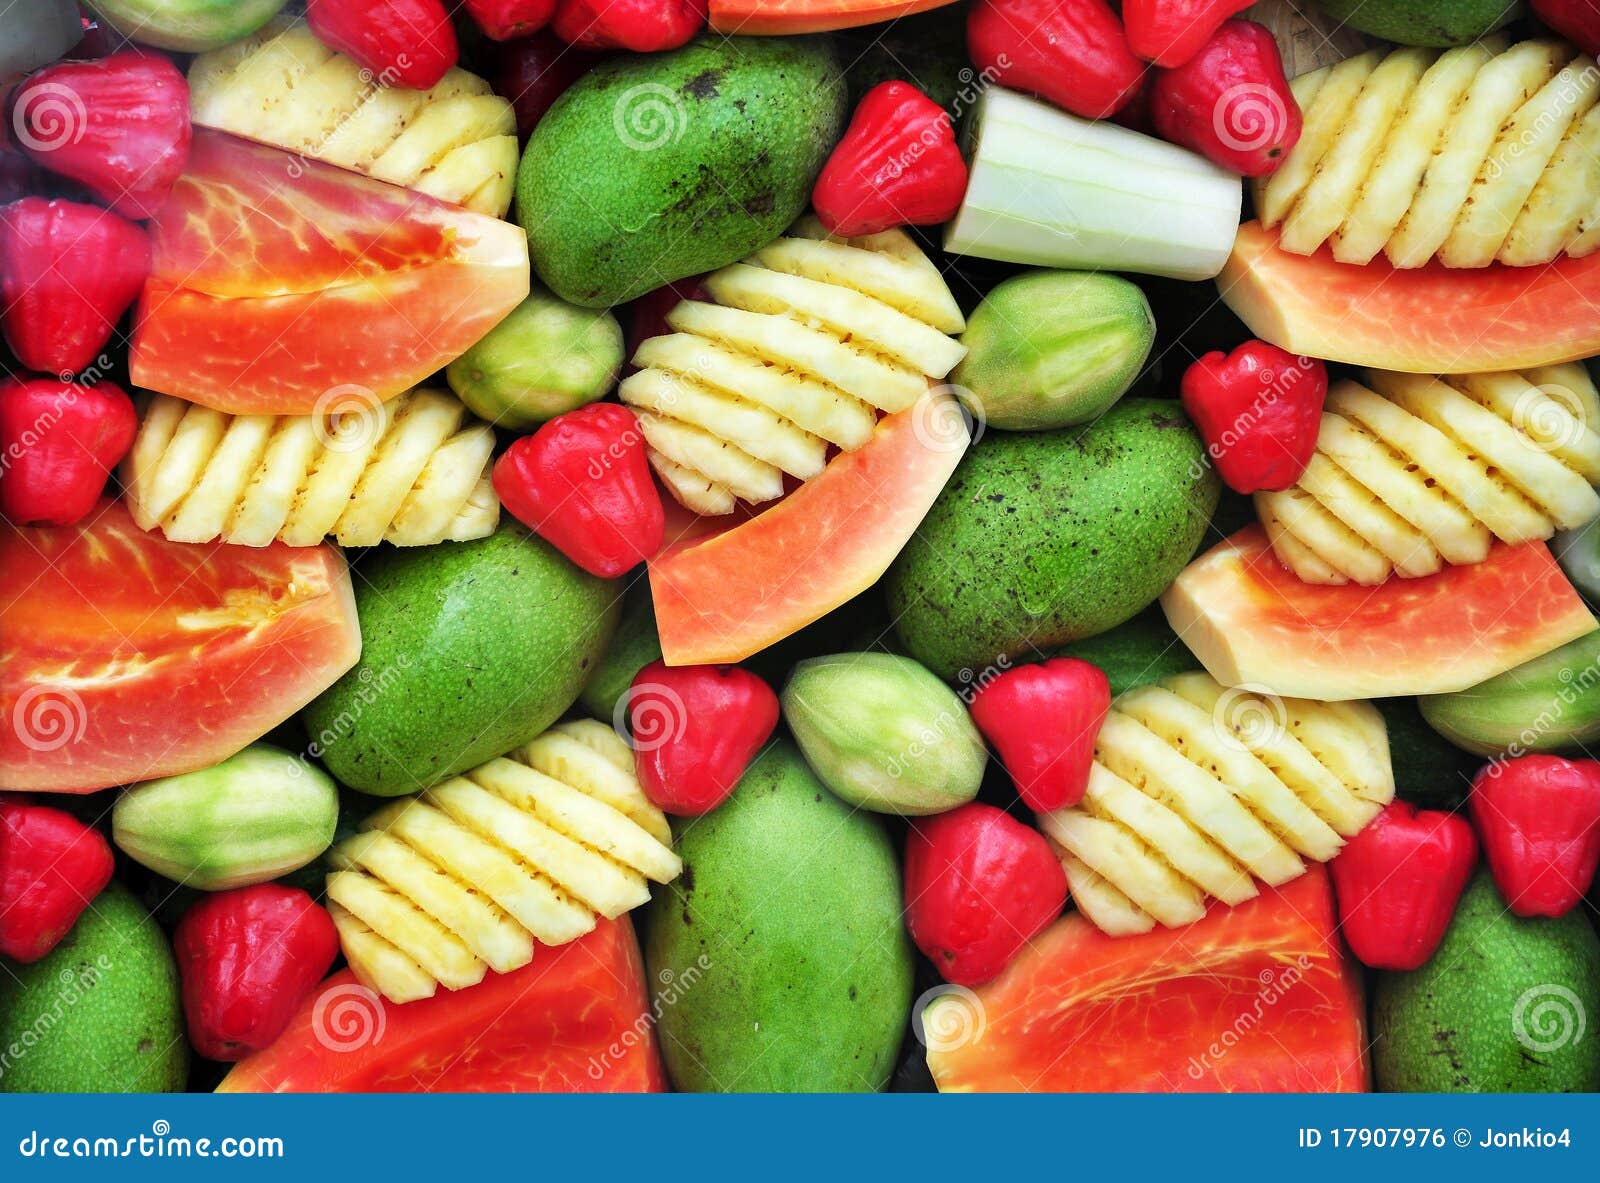 mixed fresh fruits